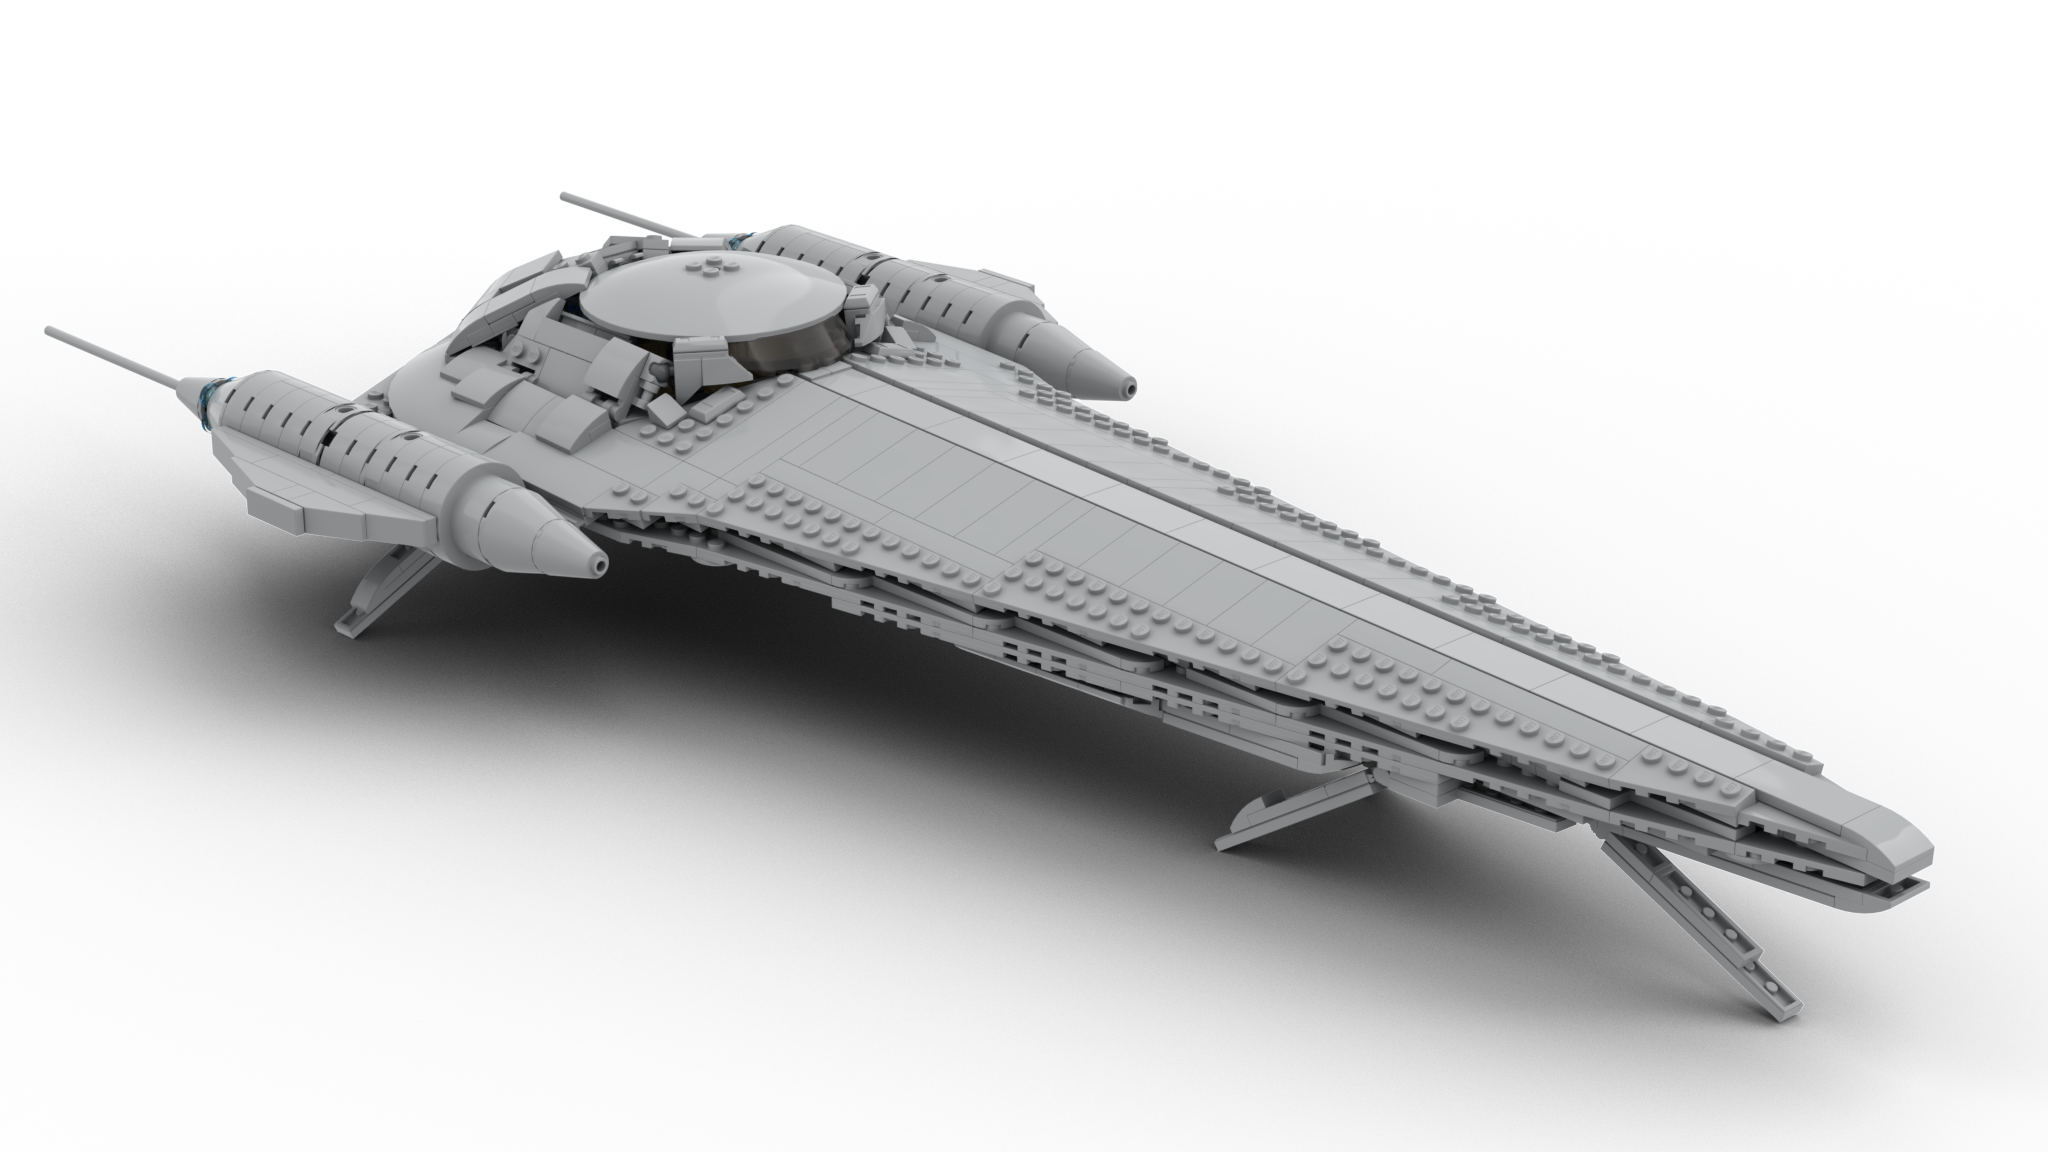 NABOO SHIP - EPISODE 1 - J-Type Nubian Royal Starship